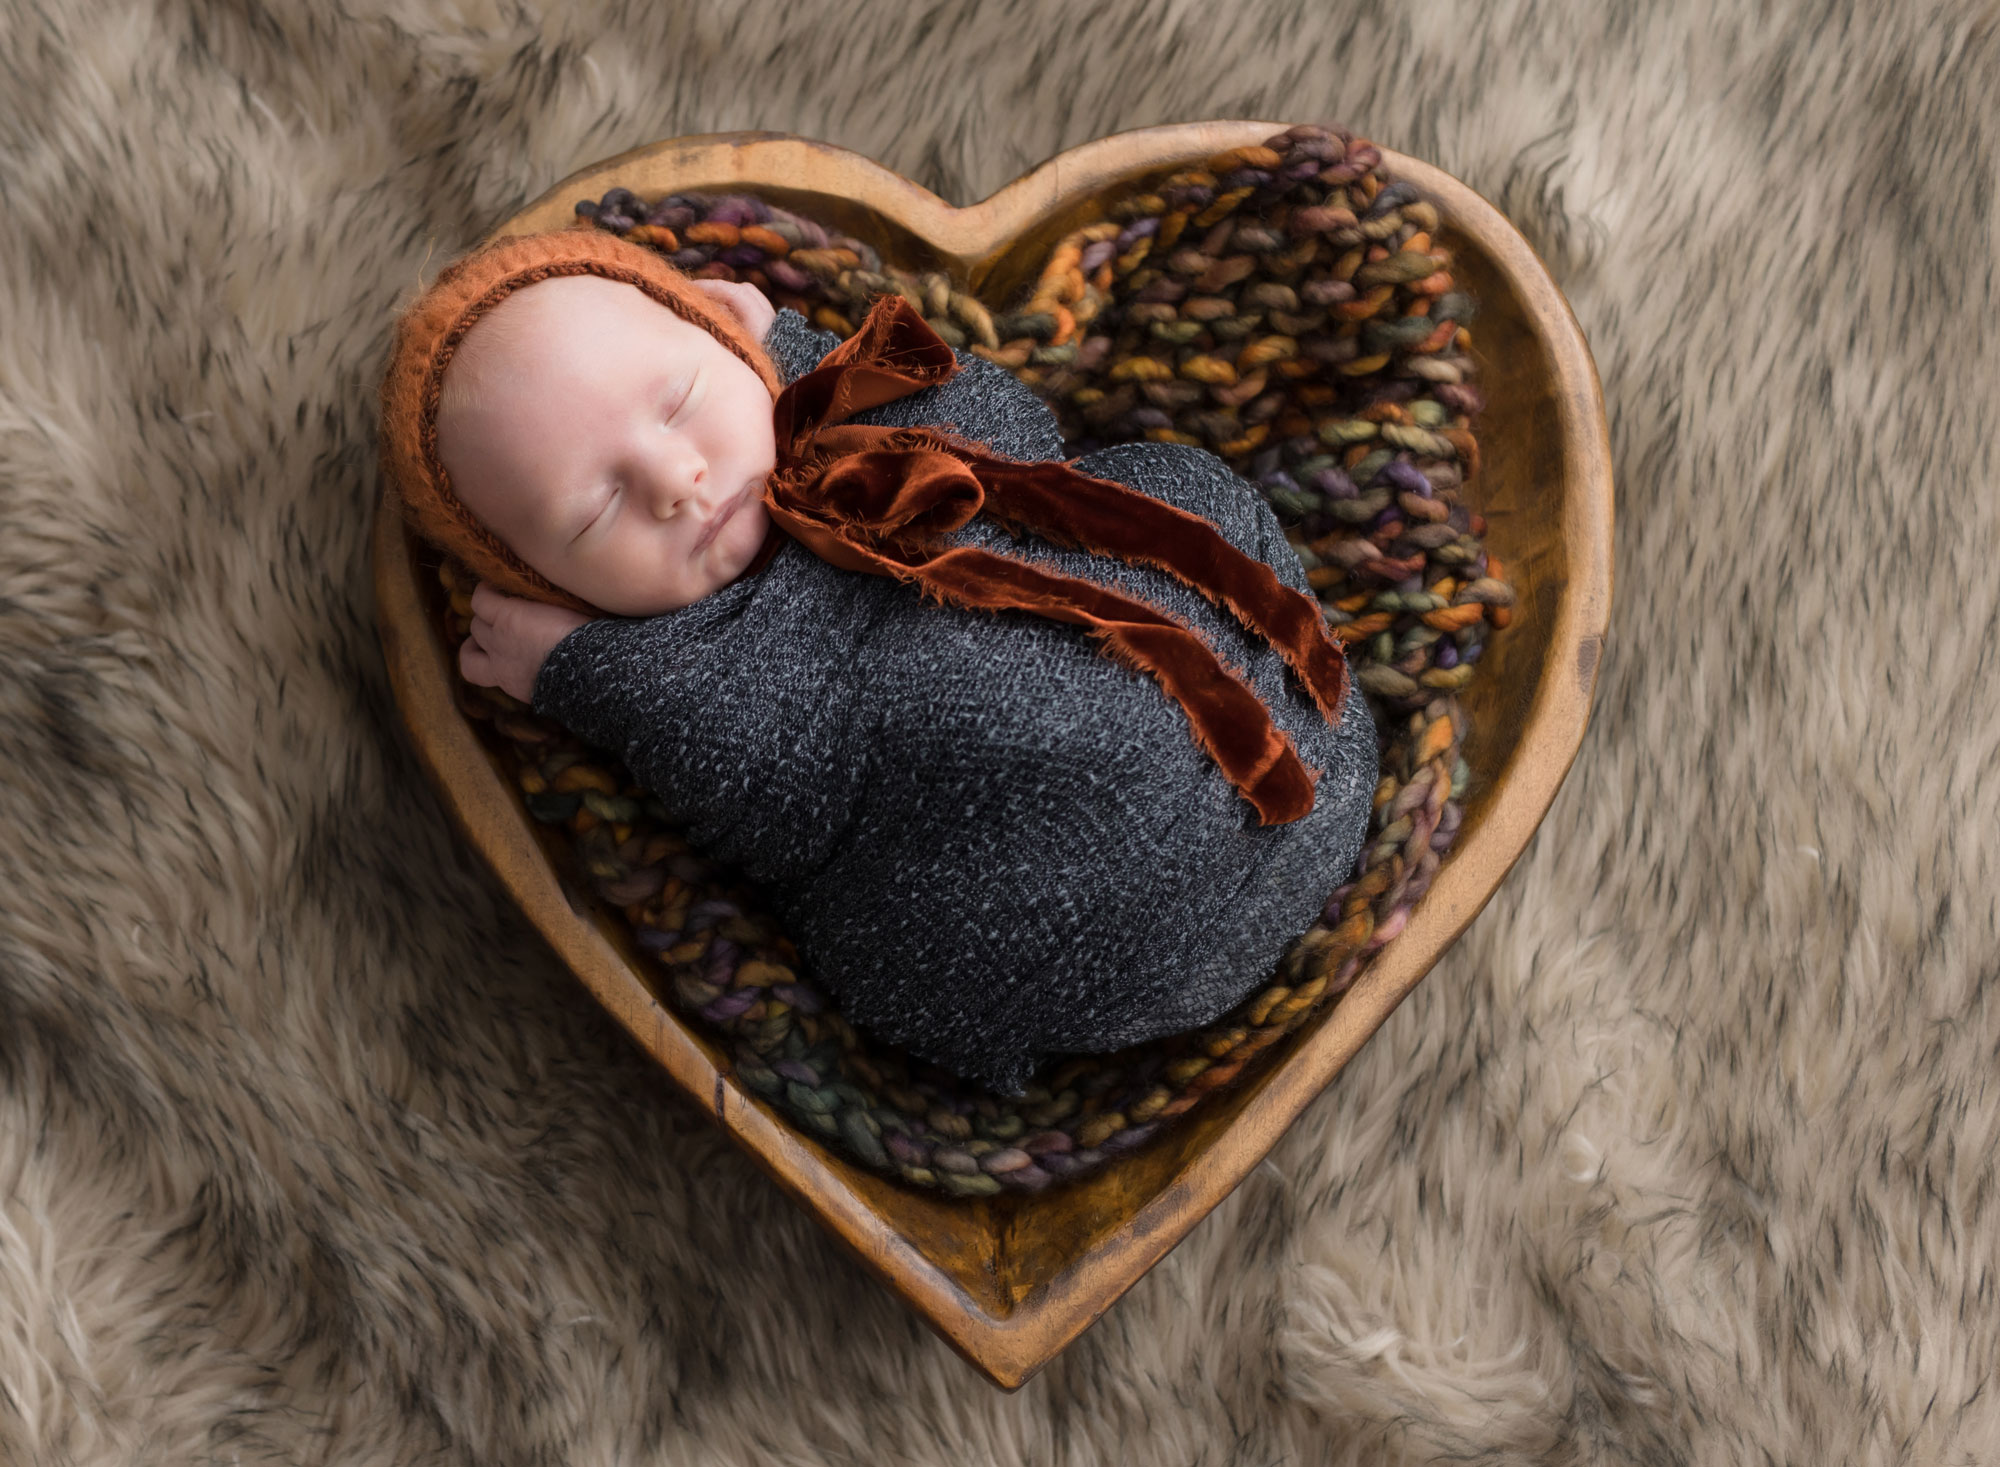 newborn baby in heart shaped bowl